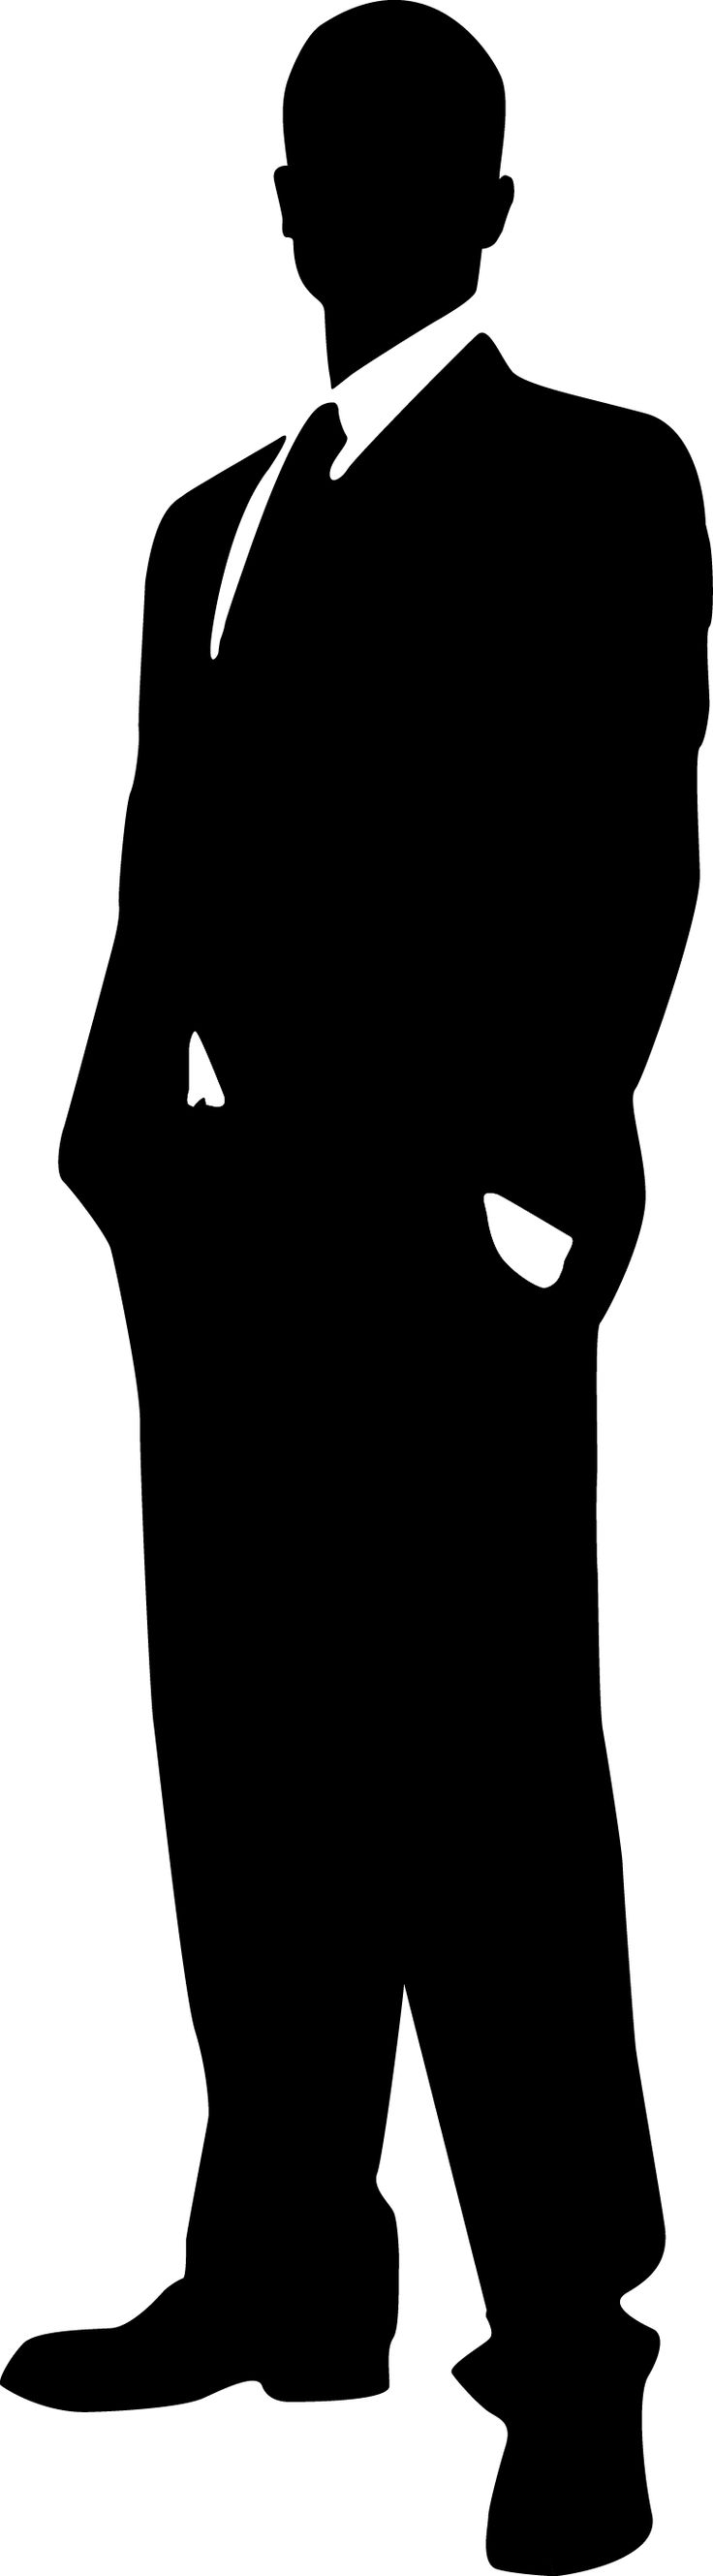 Person silhouette clip art free clipart image 2 